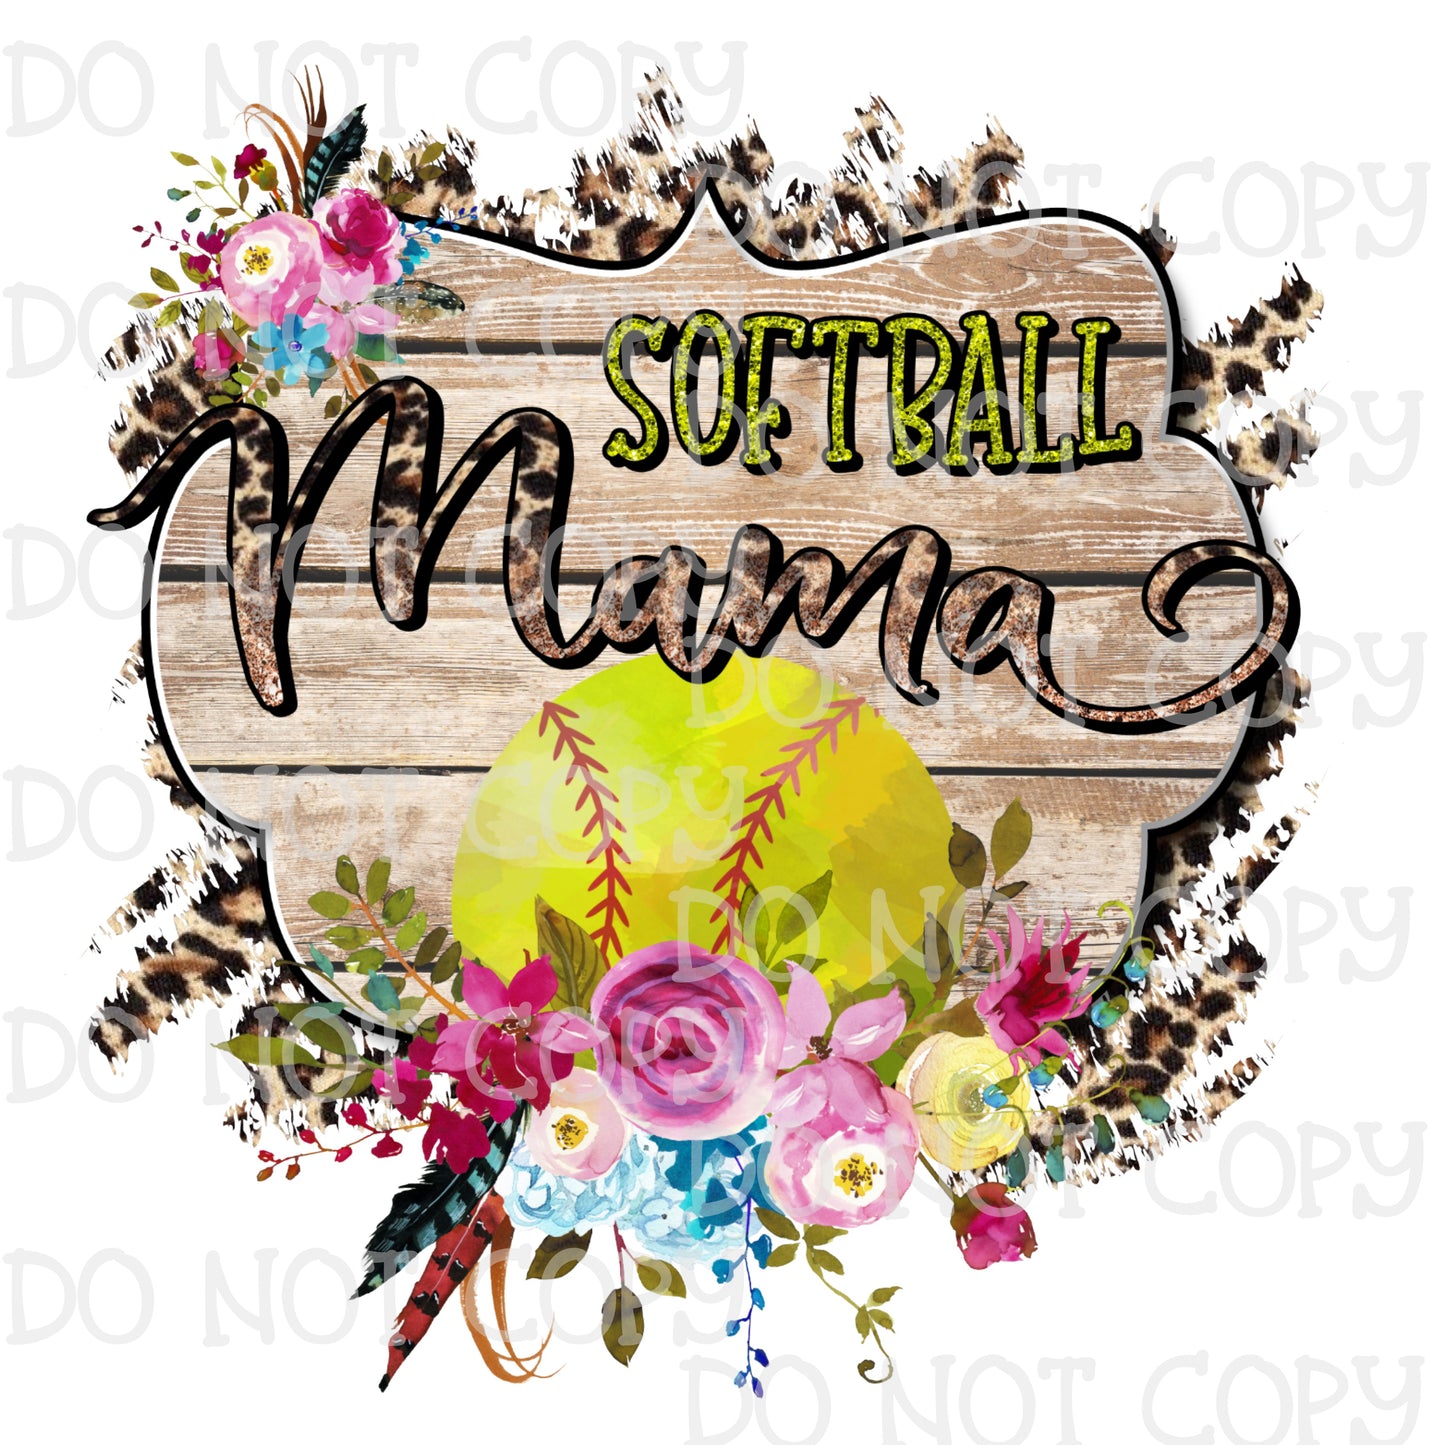 Softball Mama Floral Sublimation